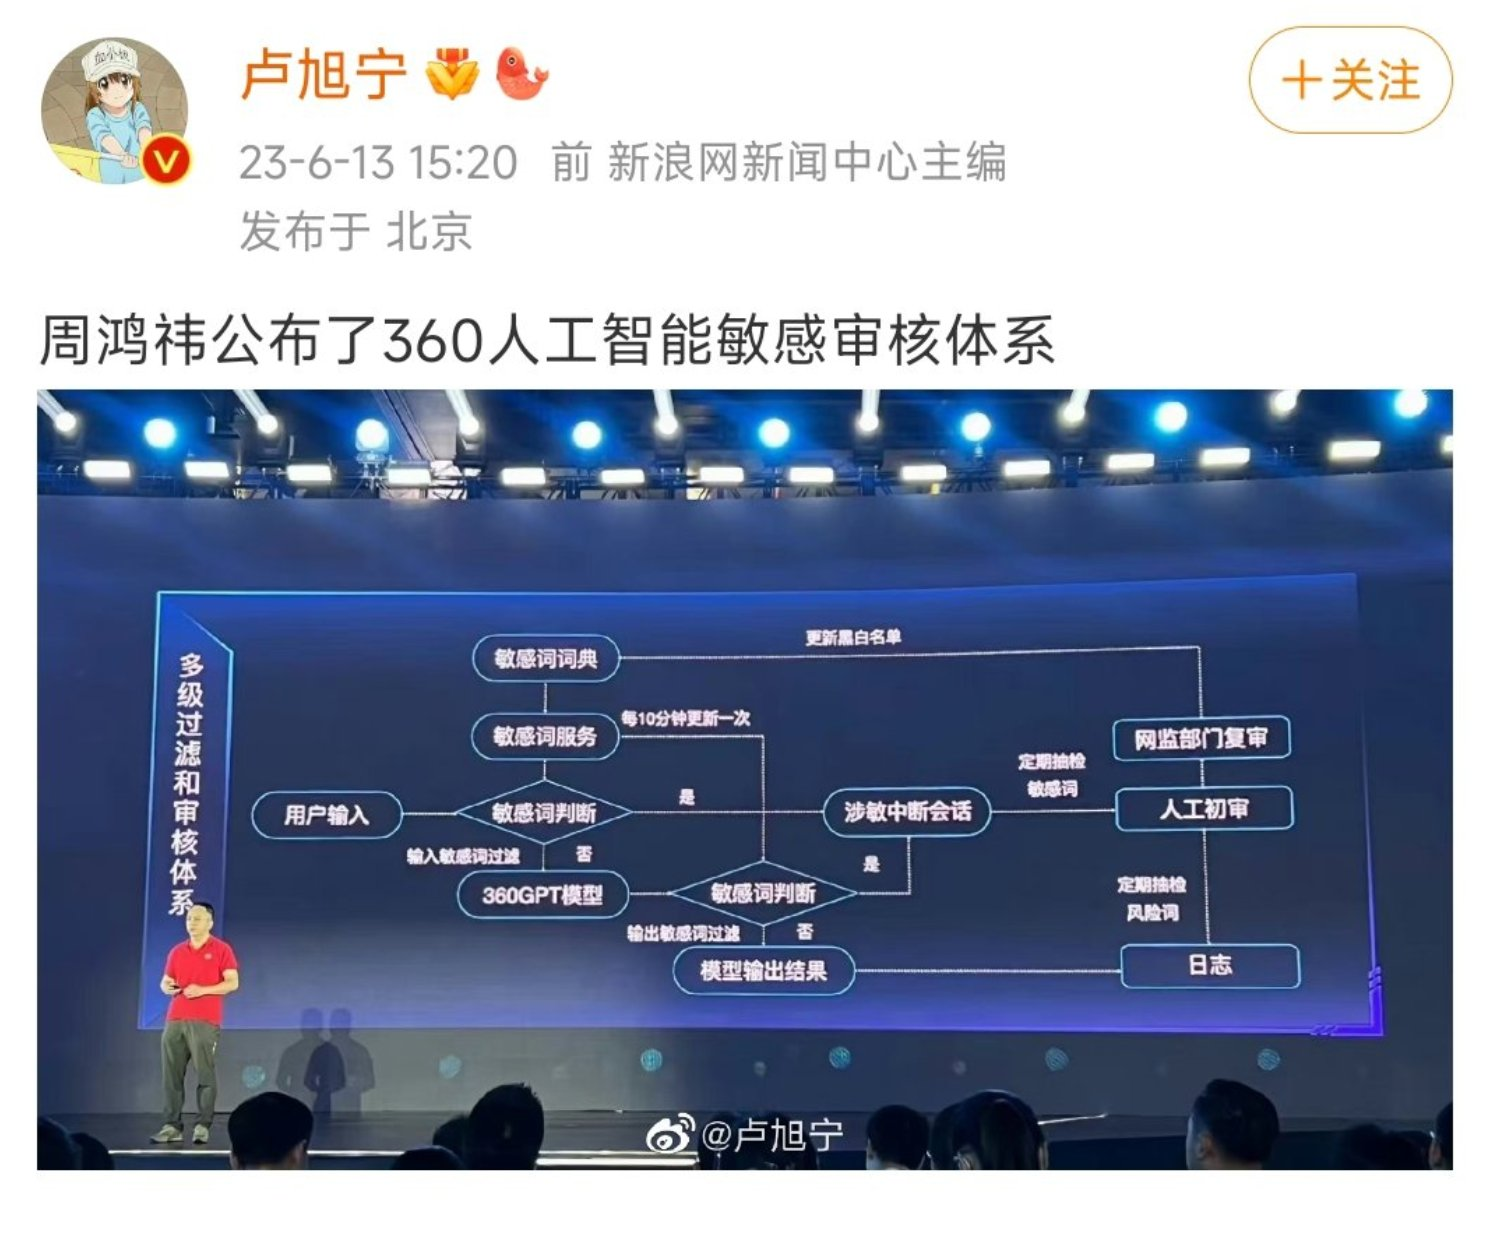 screenshot of Weibo post showing Qihoo 360's censorship flowchart